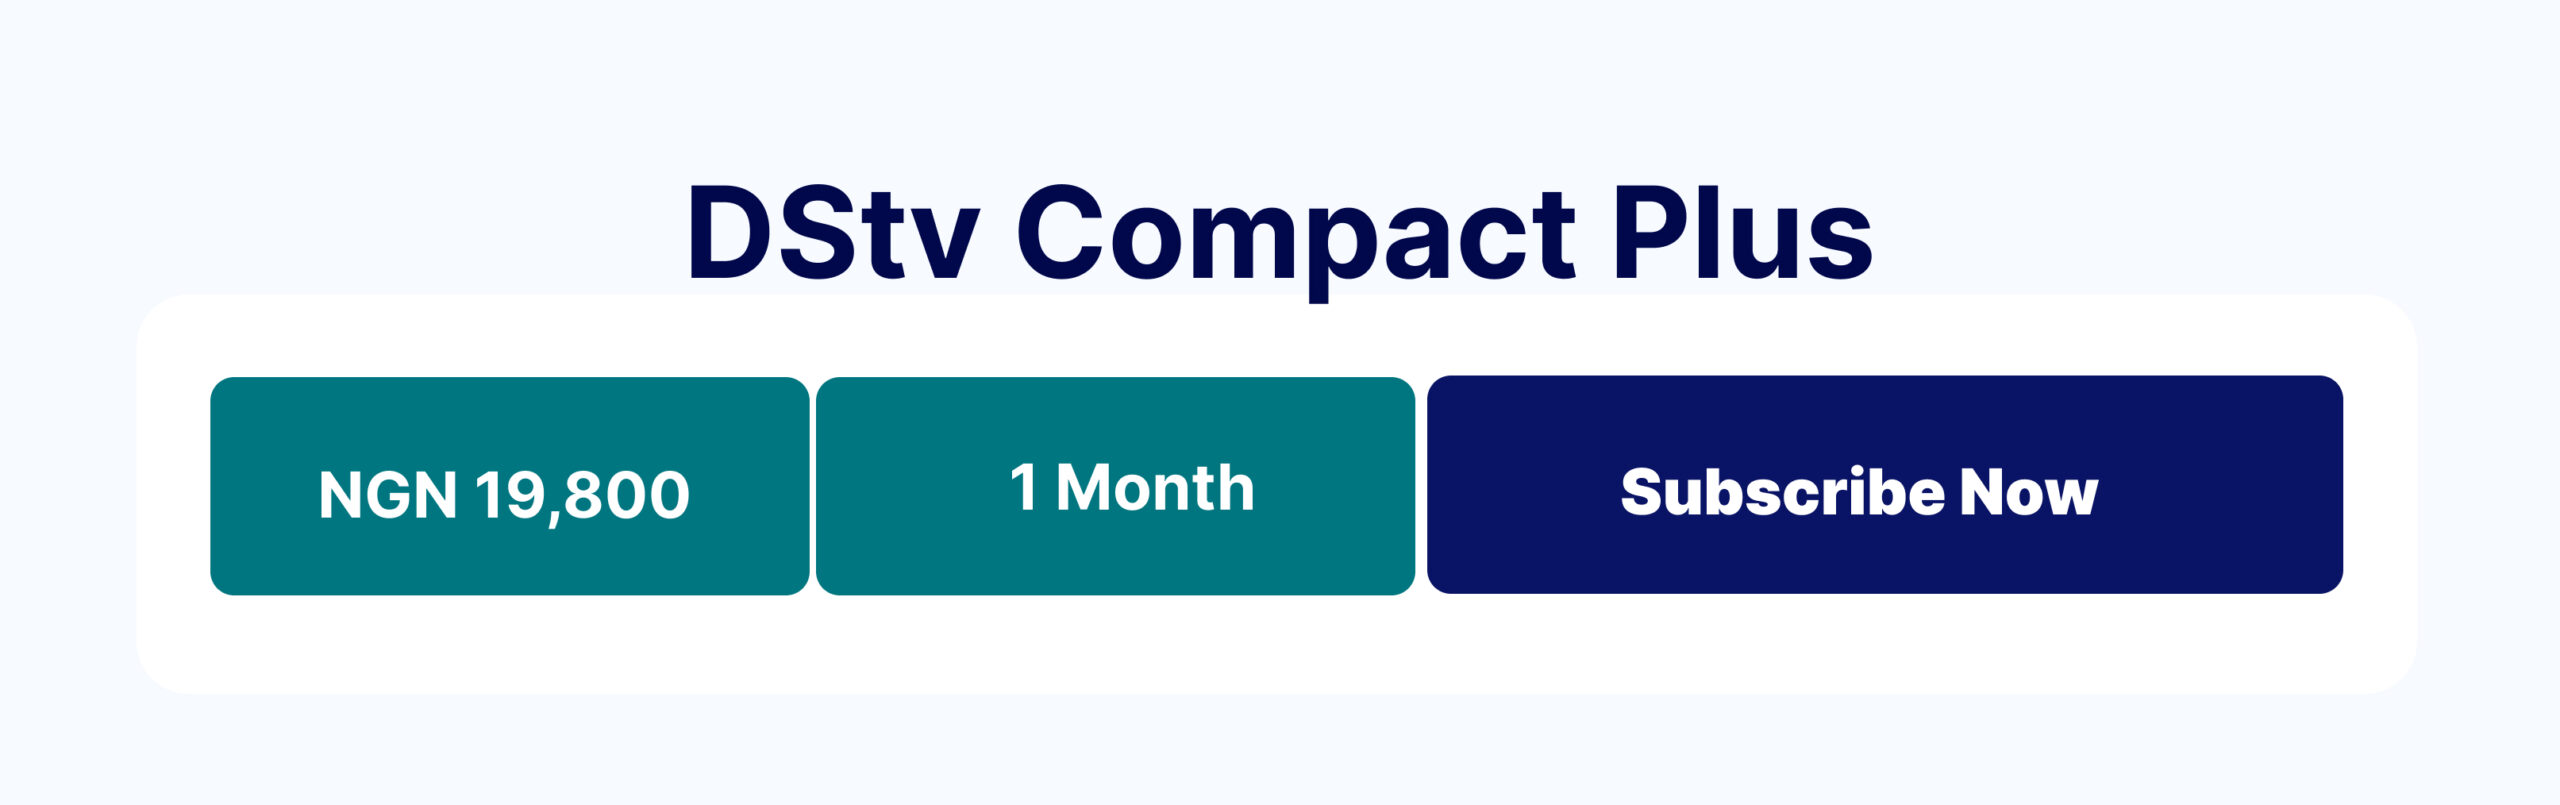 DStv Compact Plus 